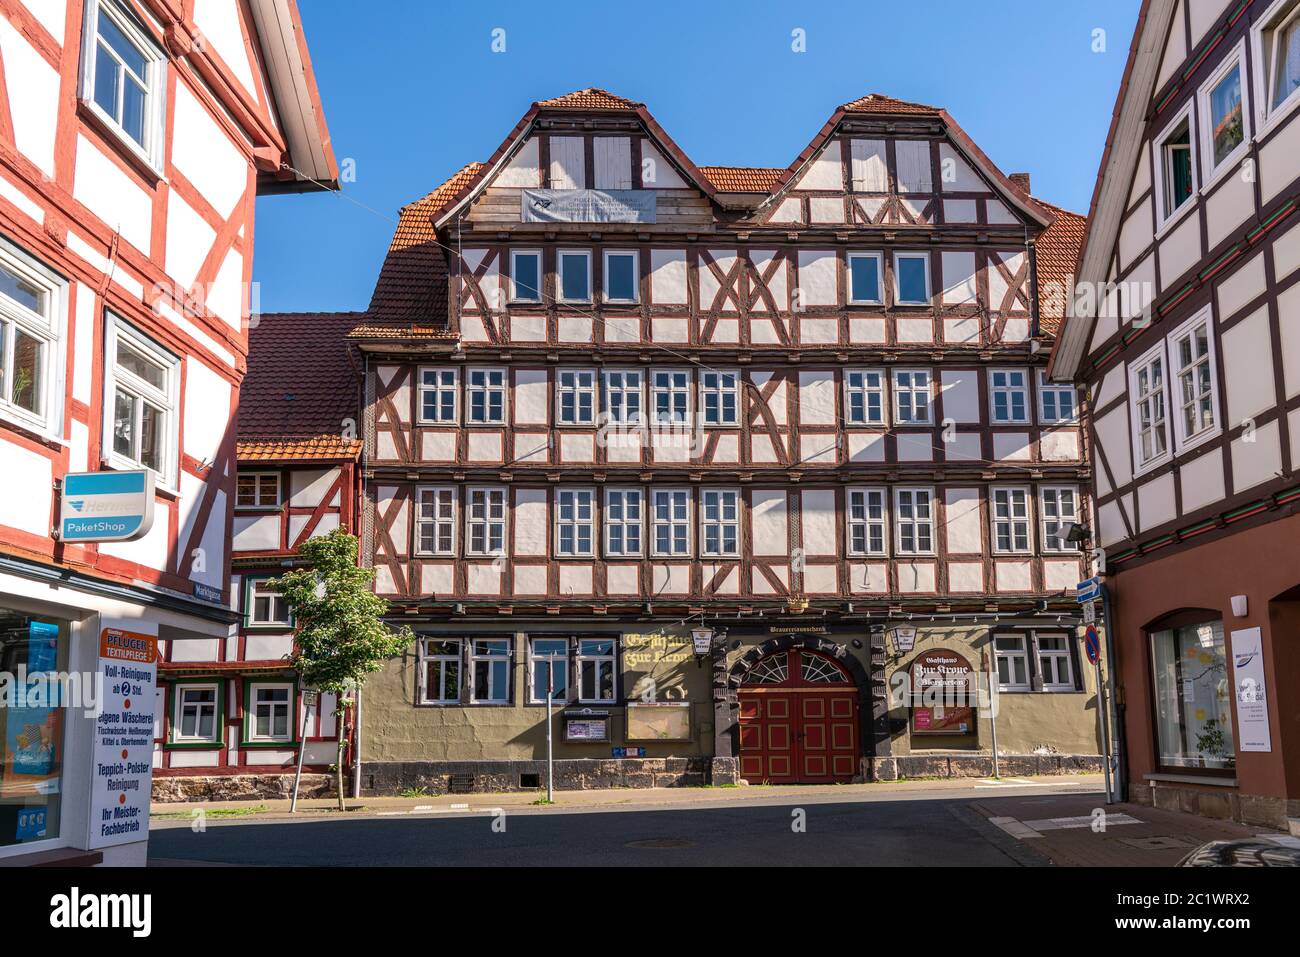 Fachwerkhäuser in der Altstadt, Witzenhausen , Hessen, Deutschland  |  timber framed houses in the old part of town, Witzenhausen, Hesse, Germany Stock Photo